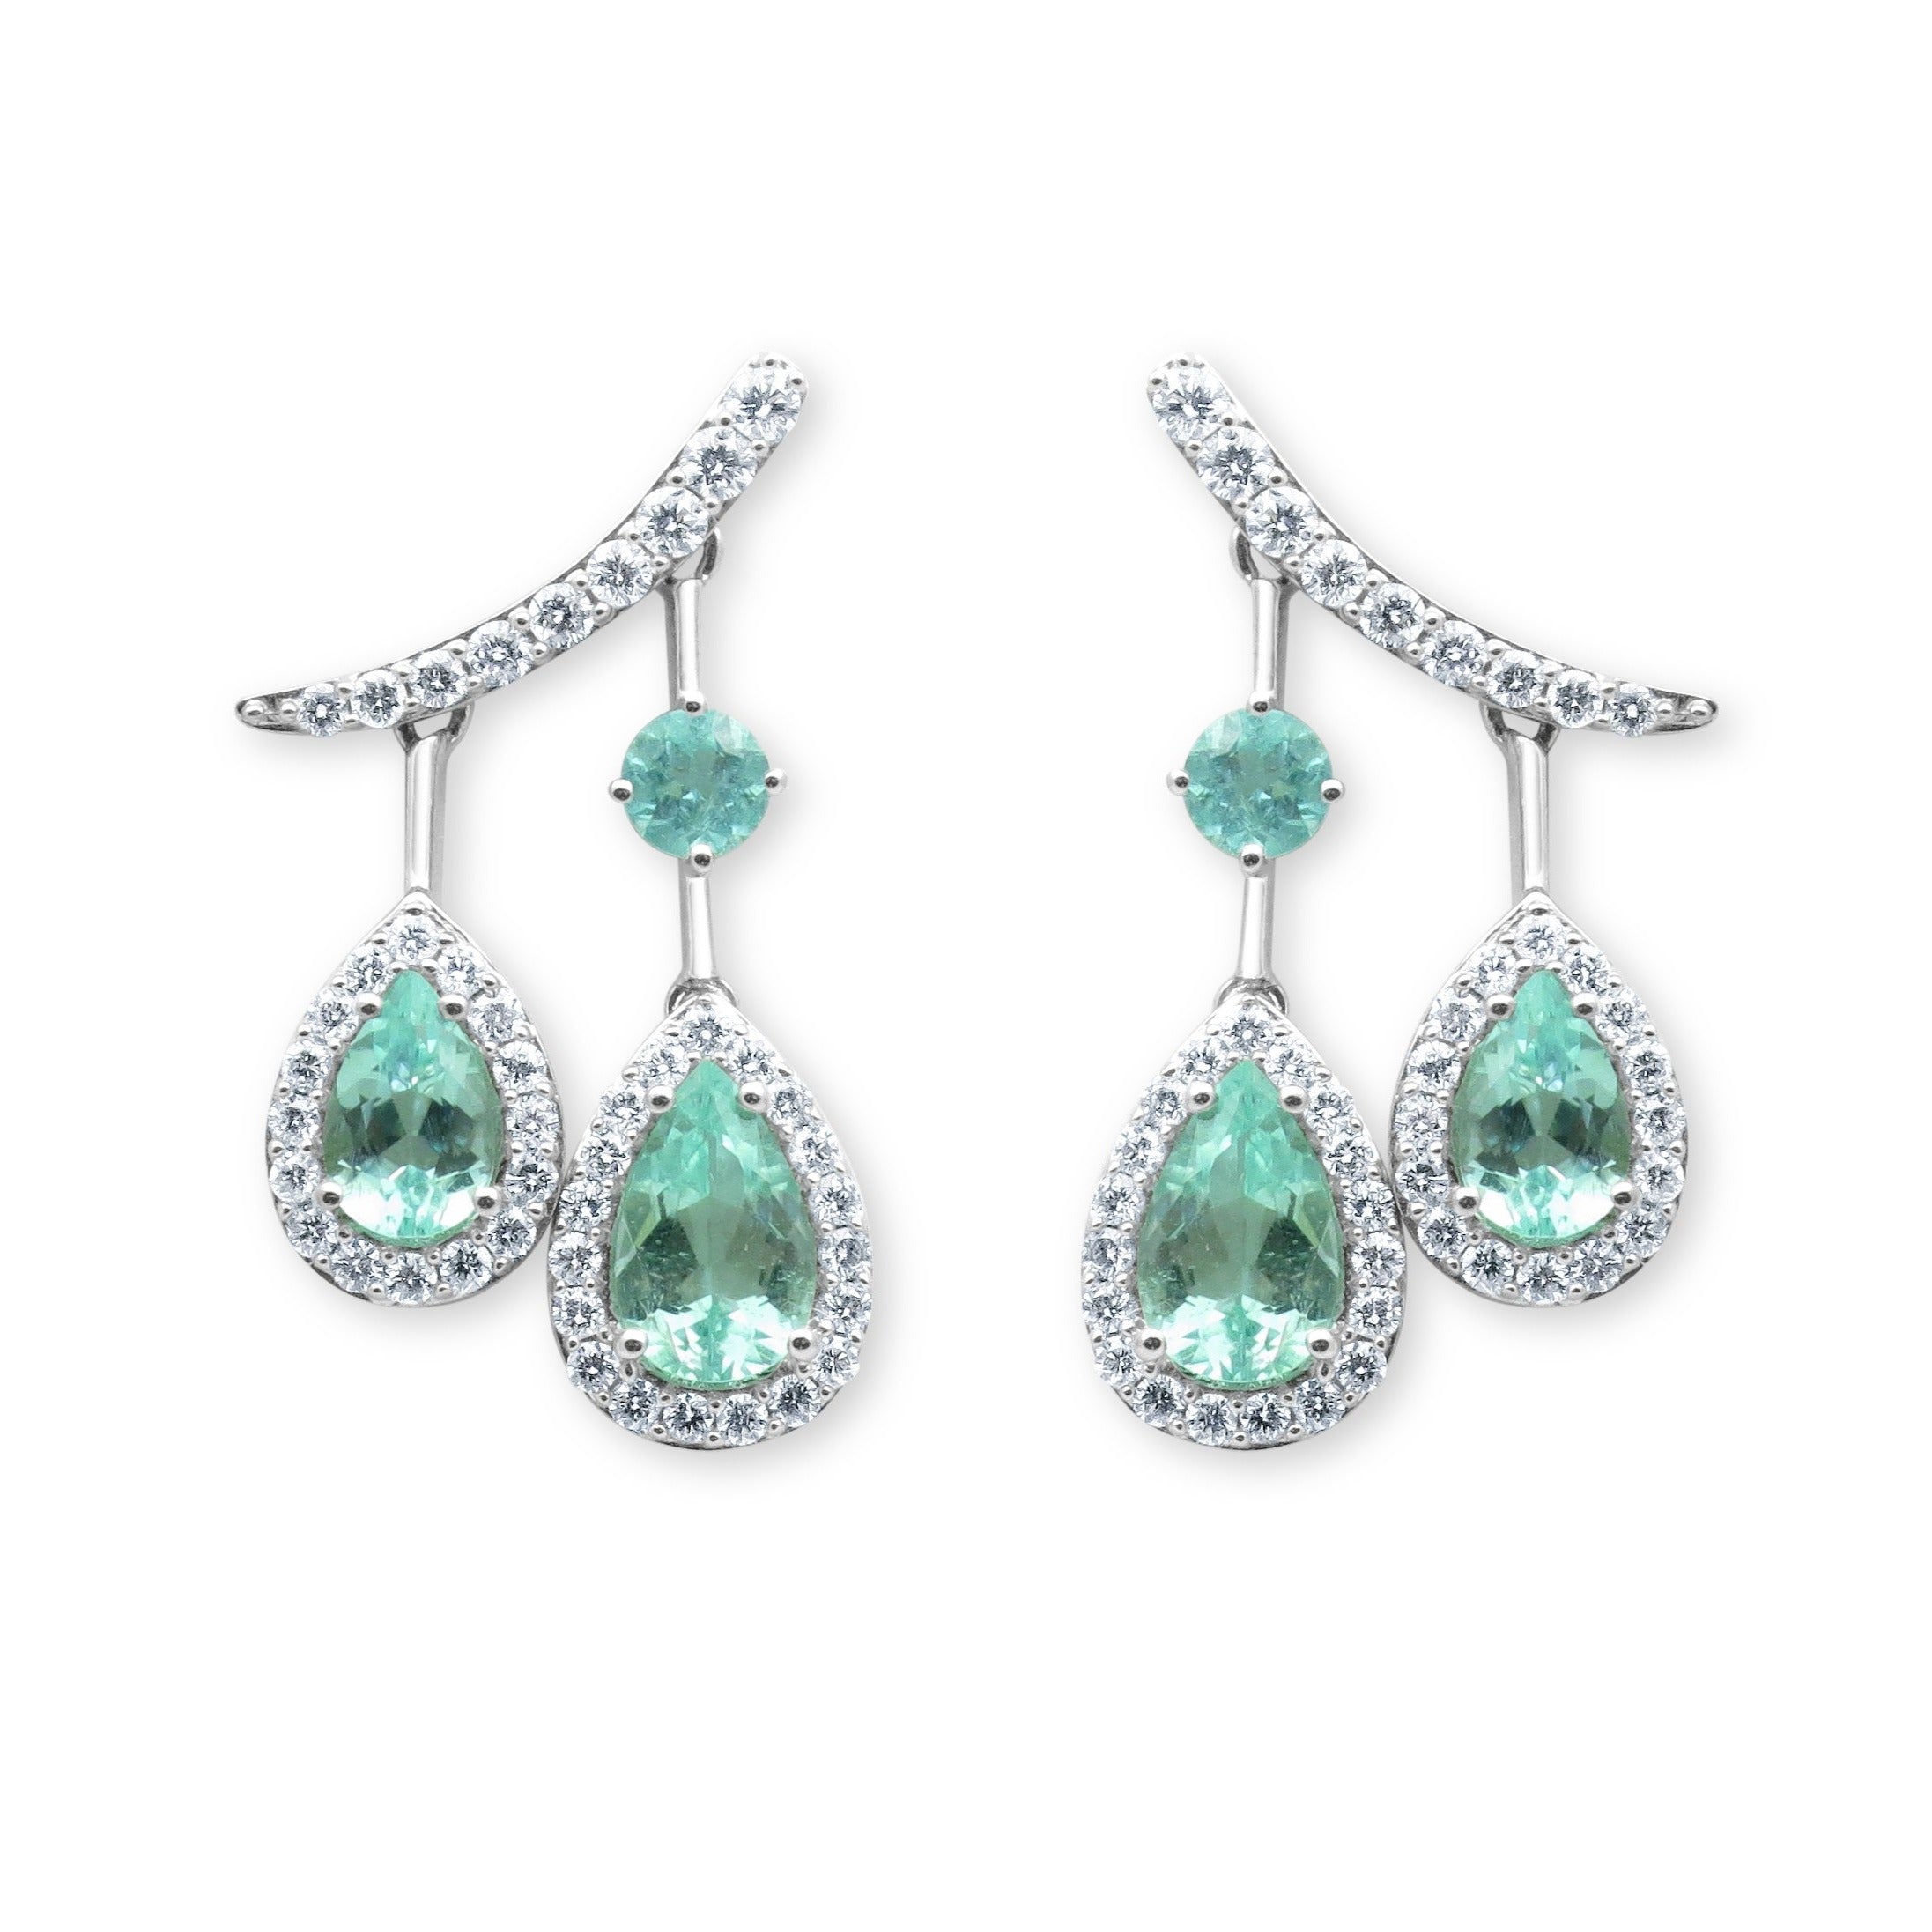 Buy Paraiba Tourmaline Earrings Aqua Blue Earrings Angelina Jolie Earrings  Statement Earrings American Diamond Aquamarine Earrings Dangle CZ Online in  India - Etsy